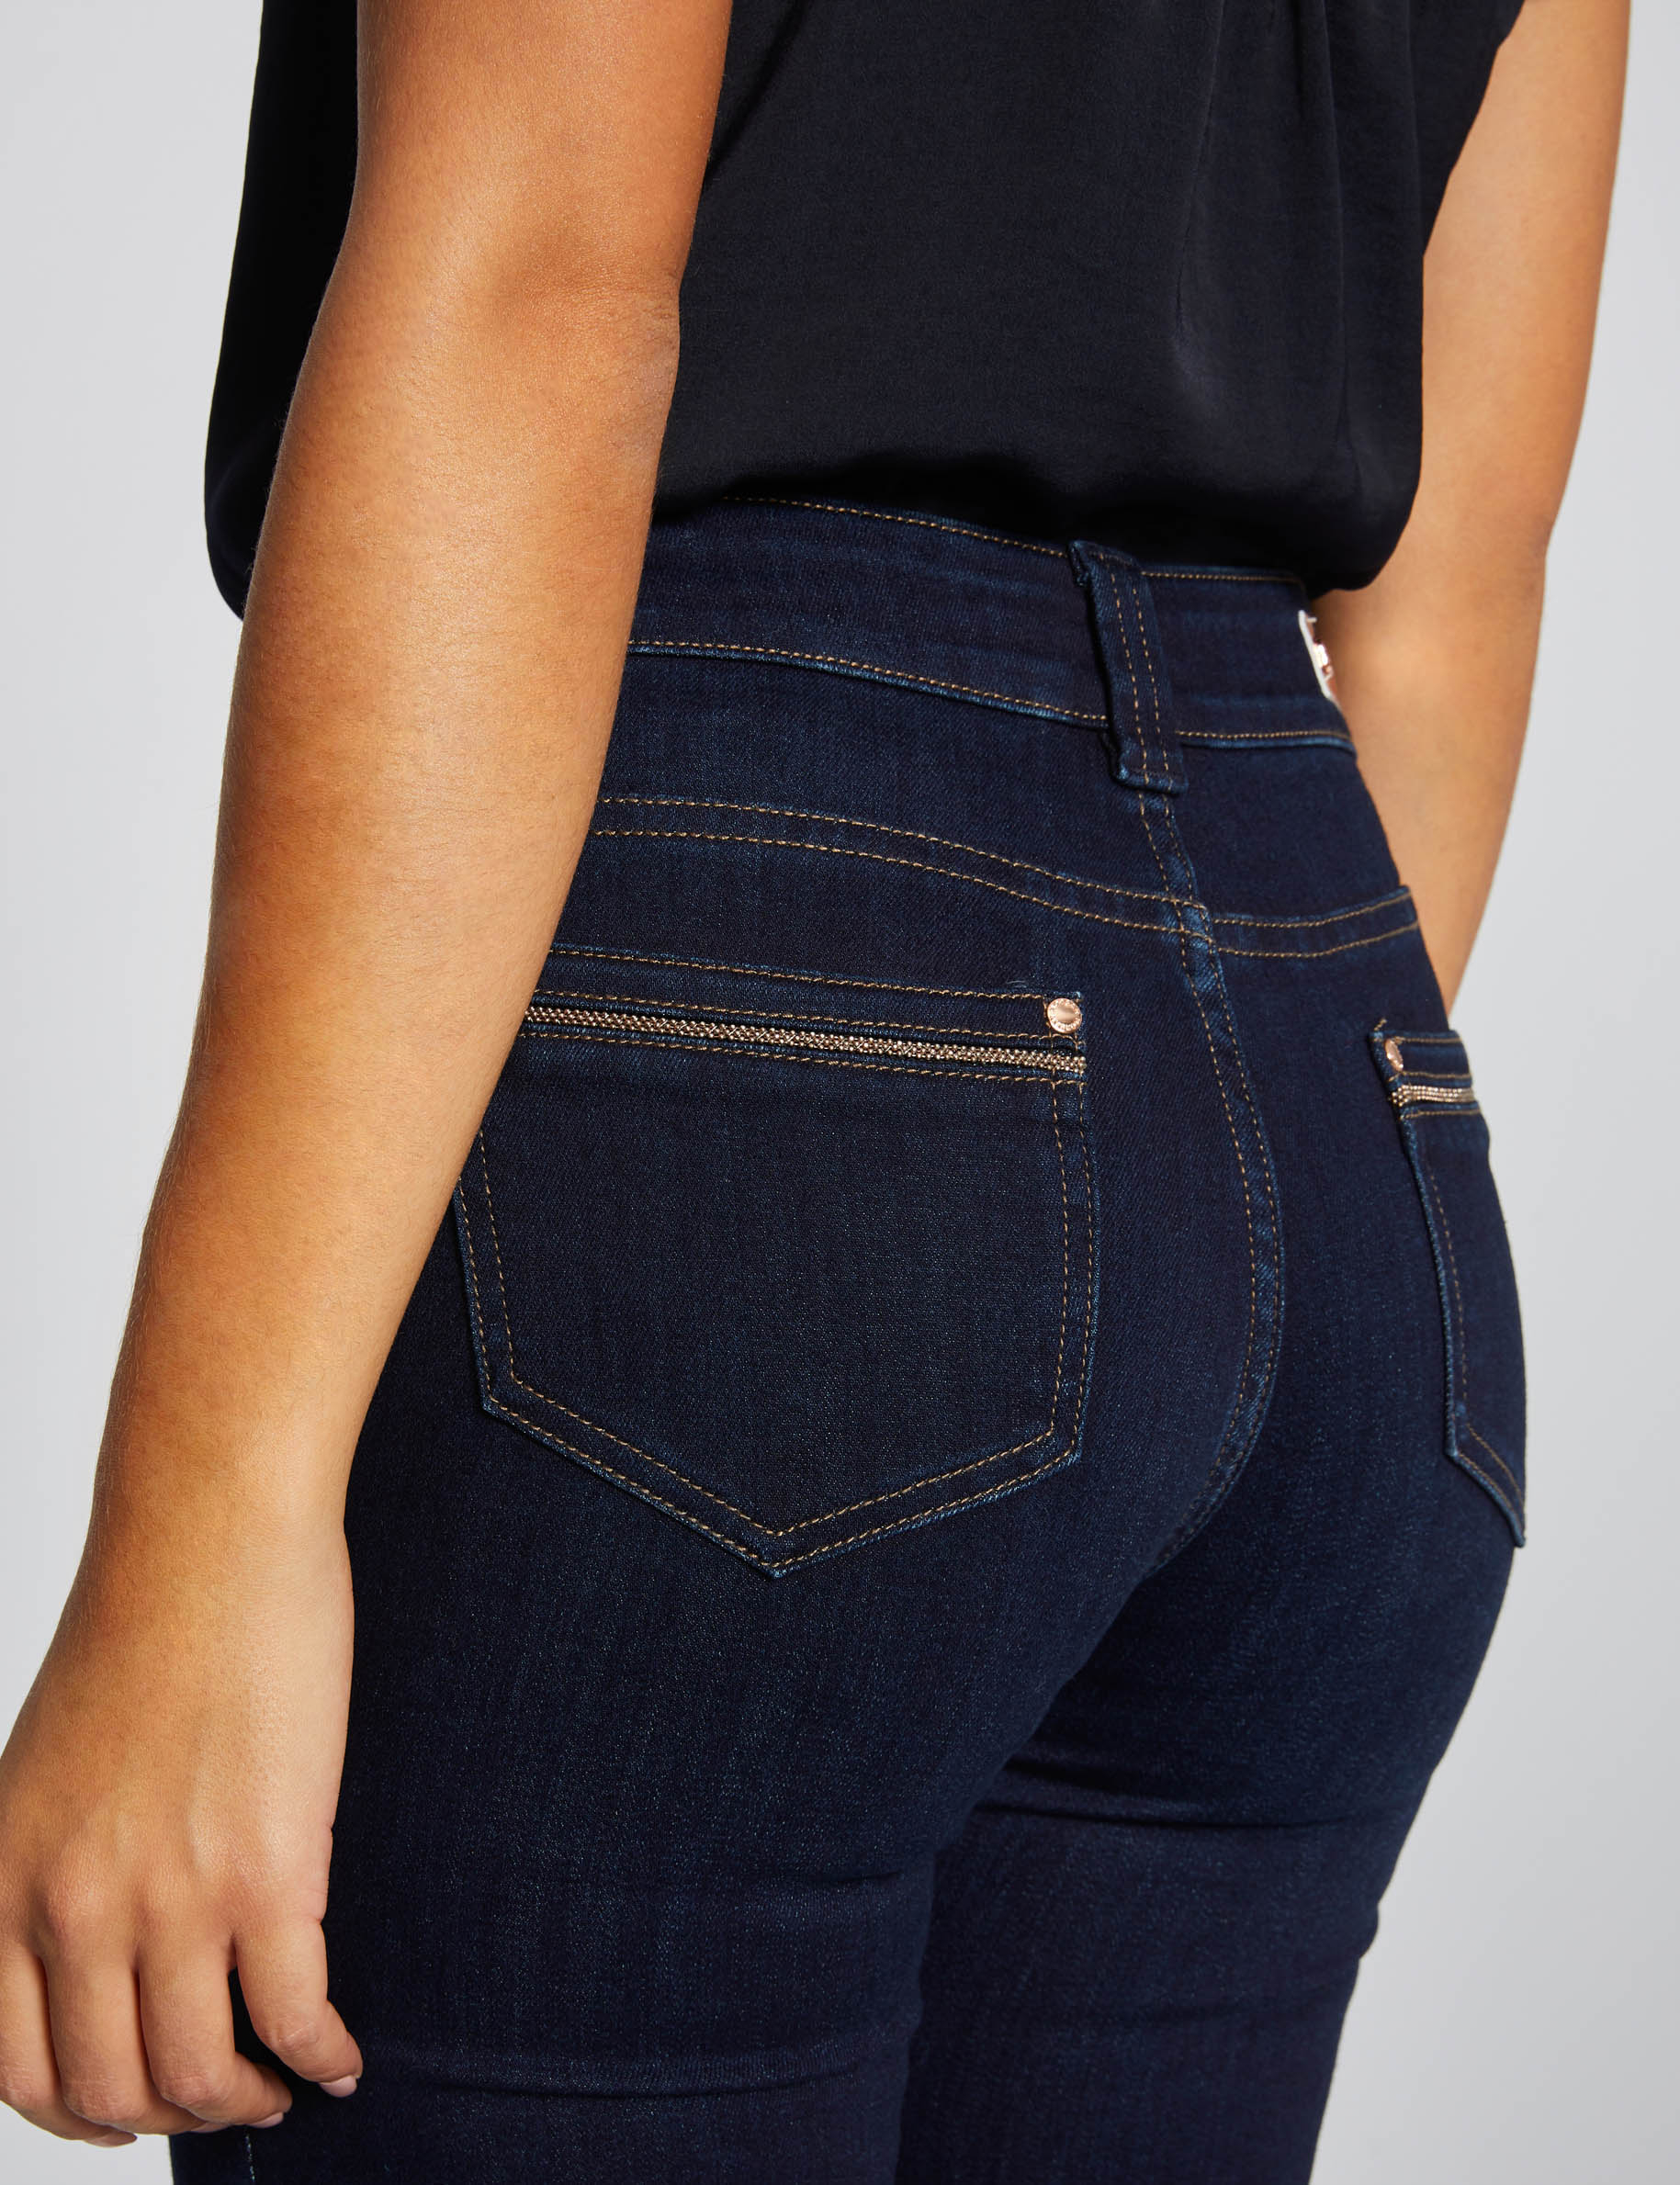 Standard waisted skinny jeans stone denim ladies'